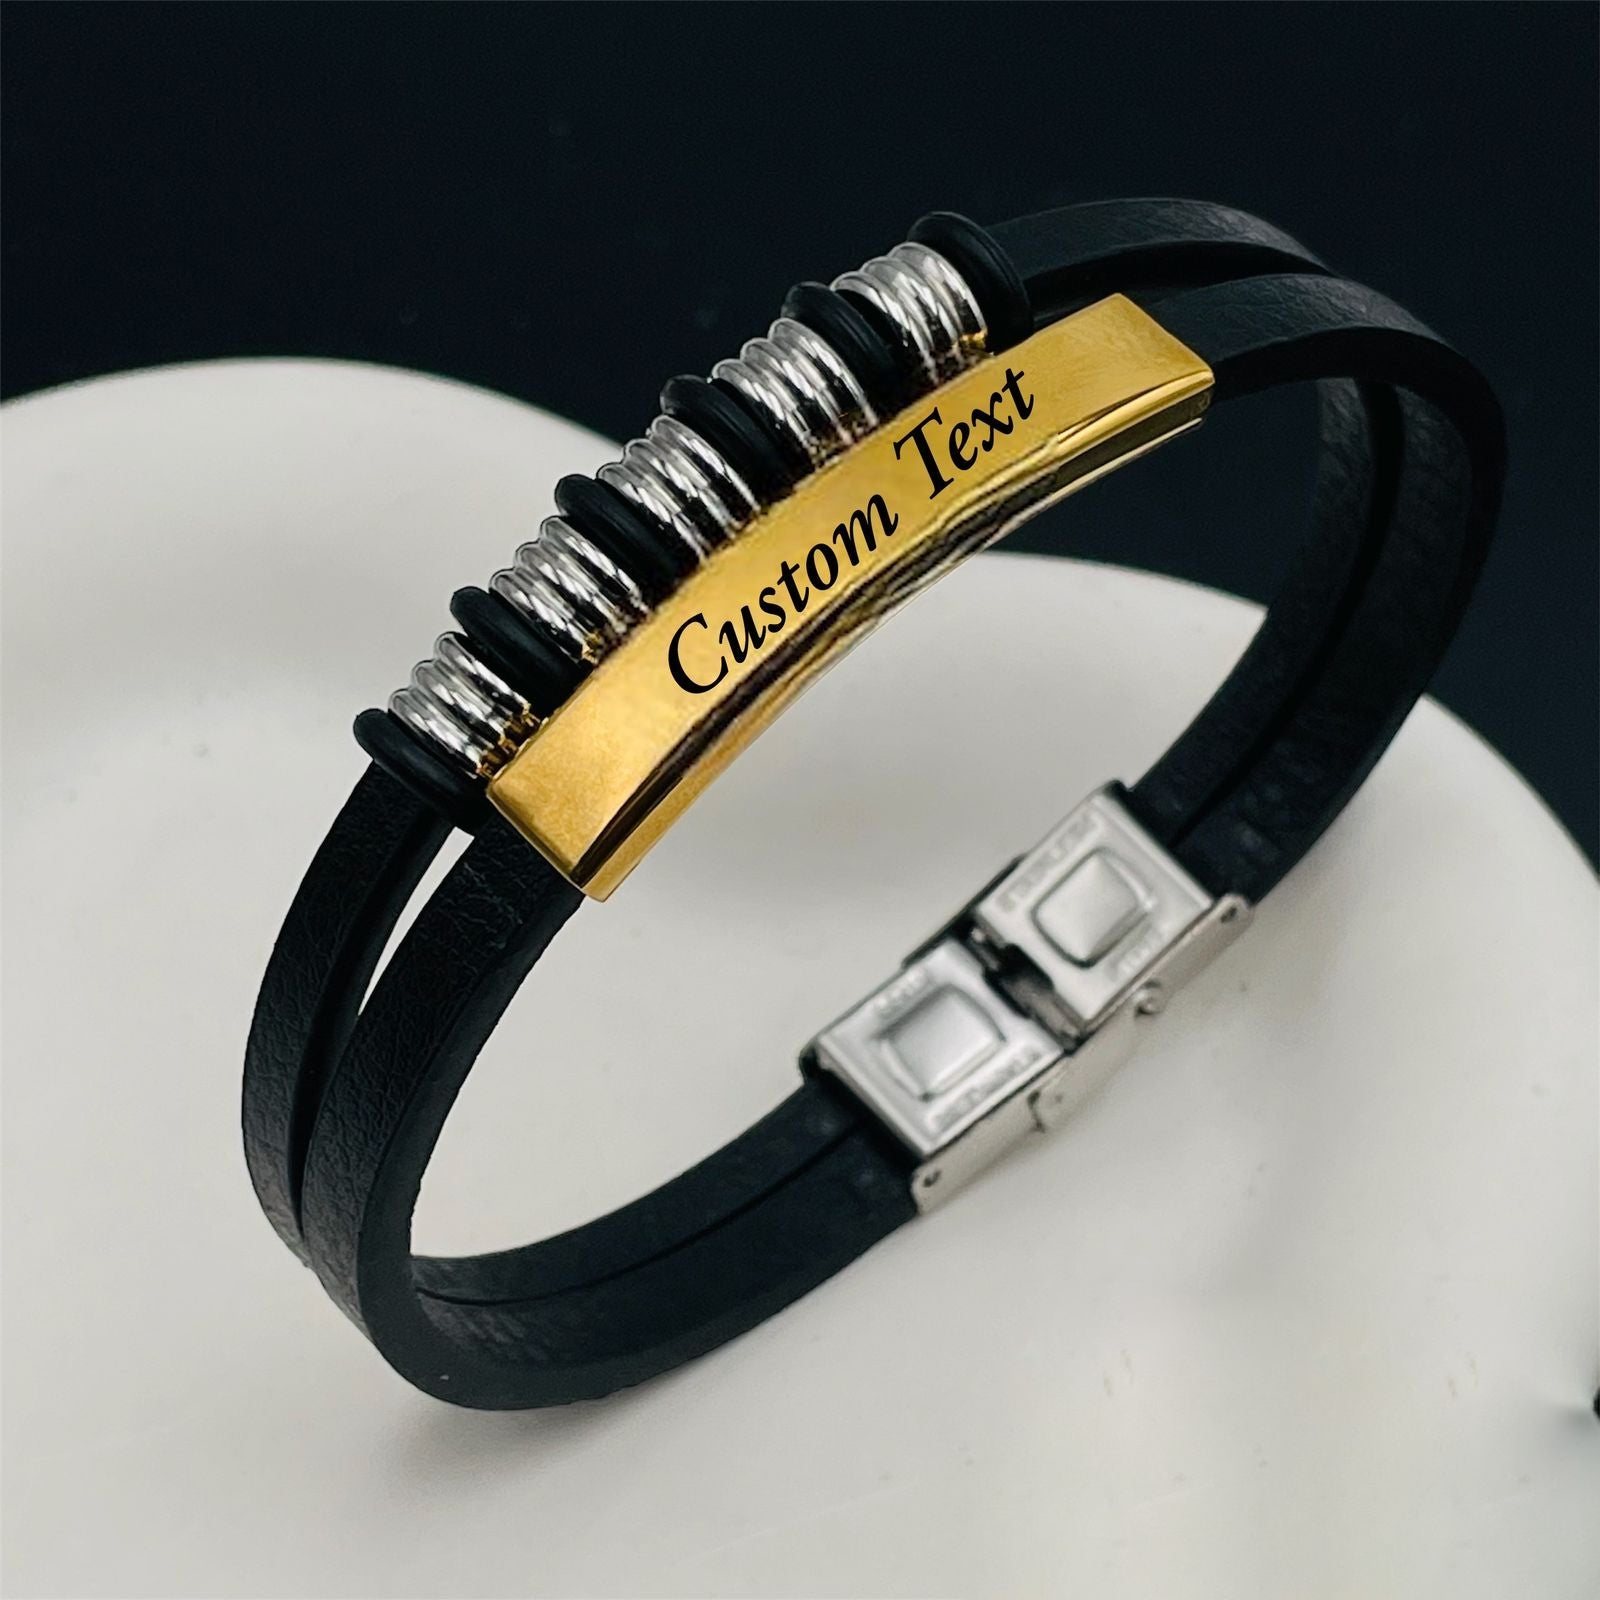 Purchase the High-Quality Men's Black Diamond Bracelets | GLAMIRA.com